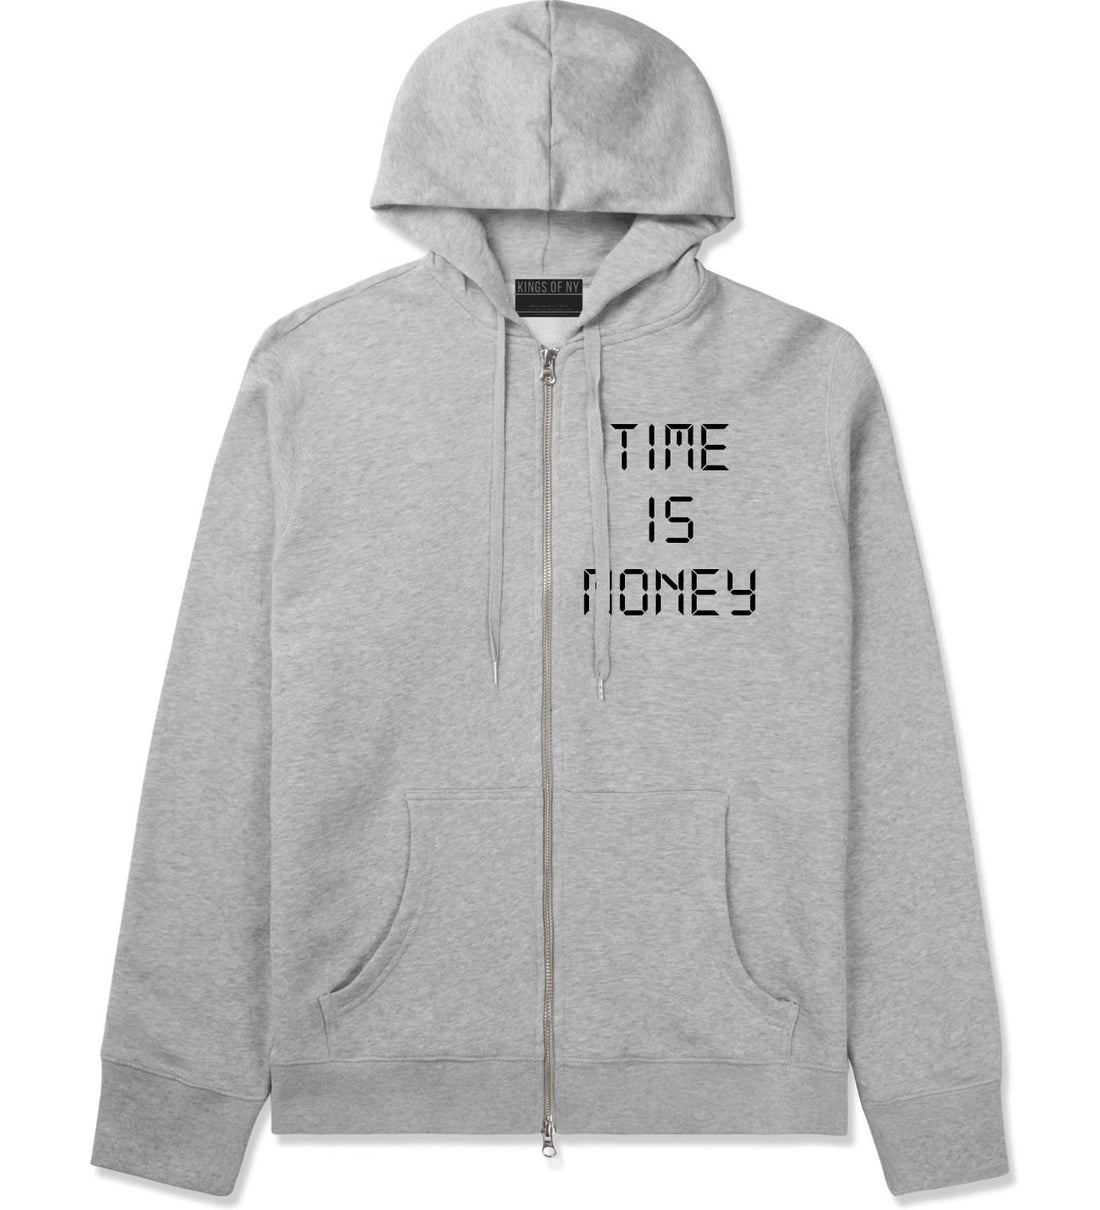 Time Is Money Zip Up Hoodie in Grey By Kings Of NY